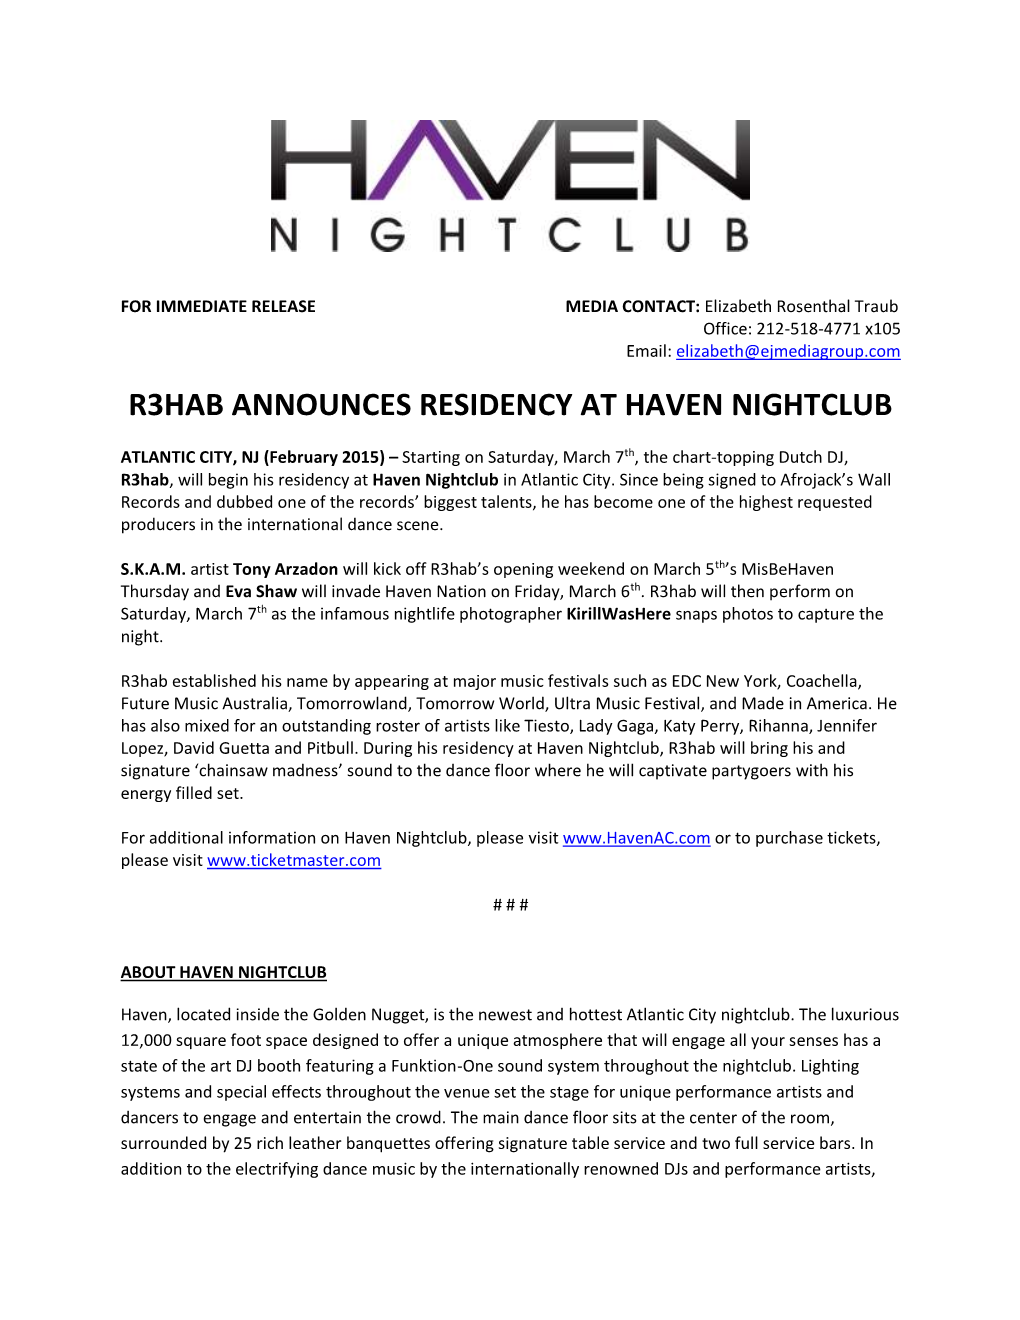 R3hab Announces Residency at Haven Nightclub